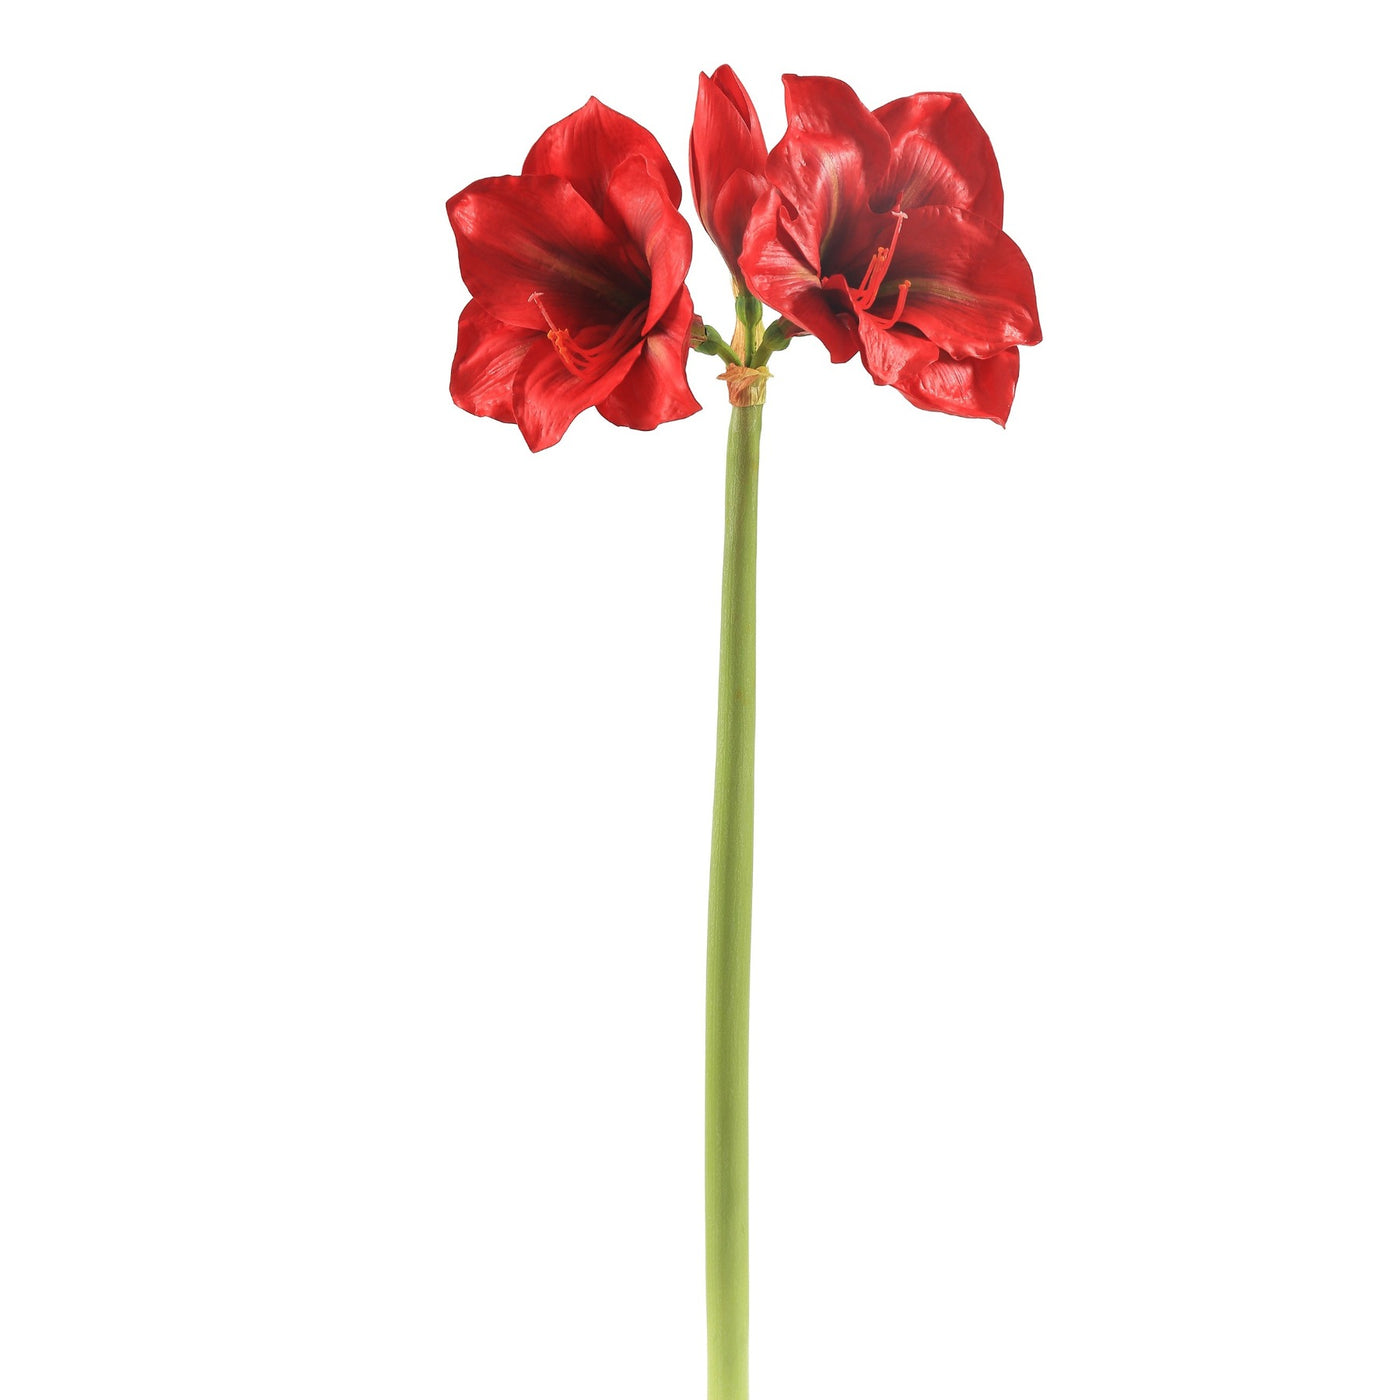 Realistic red amaryllis single stem